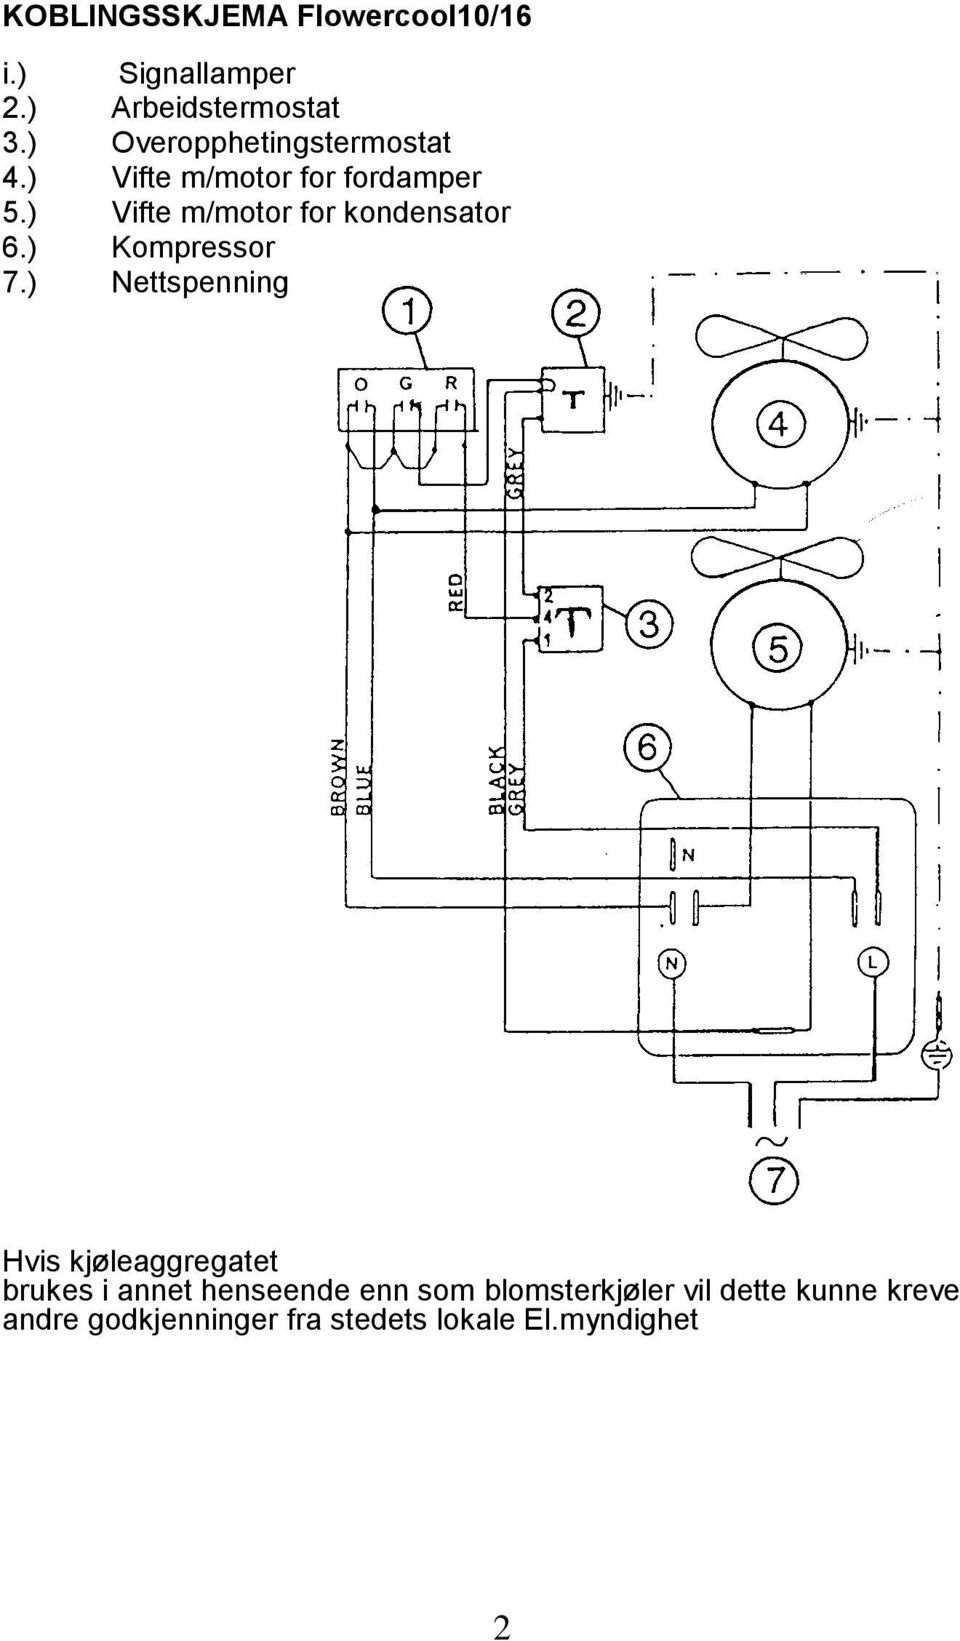 ) Vifte m/motor for kondensator 6.) Kompressor 7.